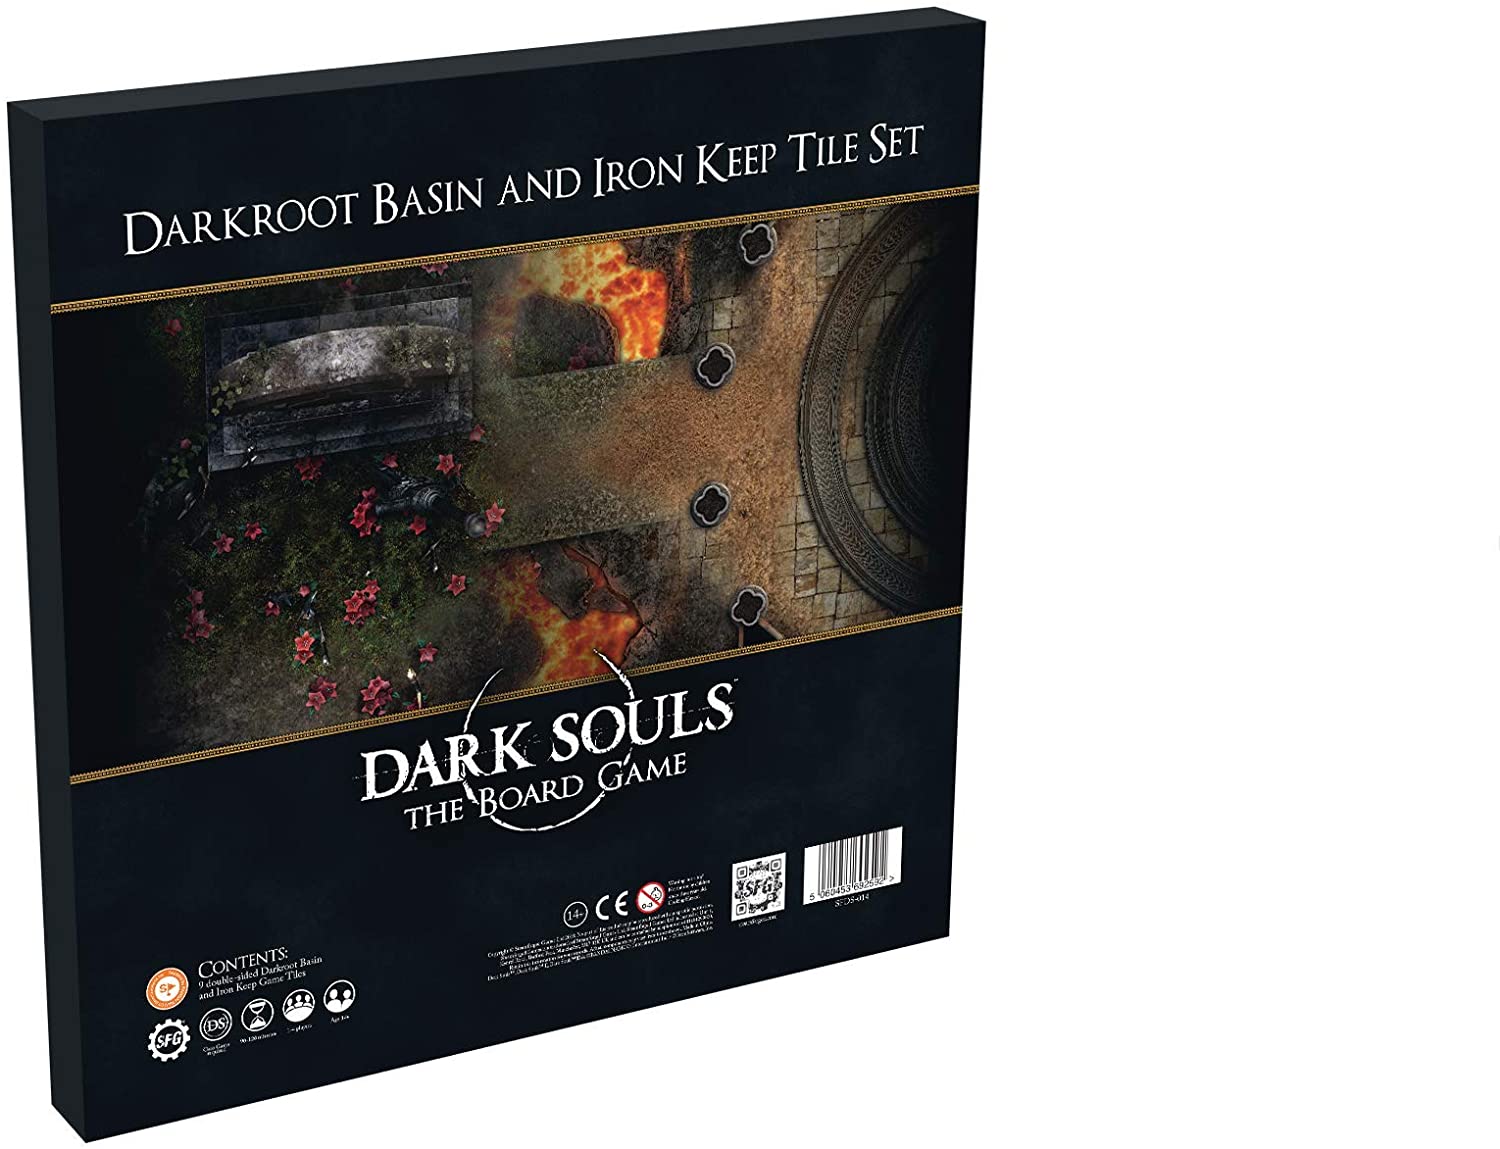 Dark Souls: The Board Game - Darkroot Basin & Iron Keep Tiles Expansion